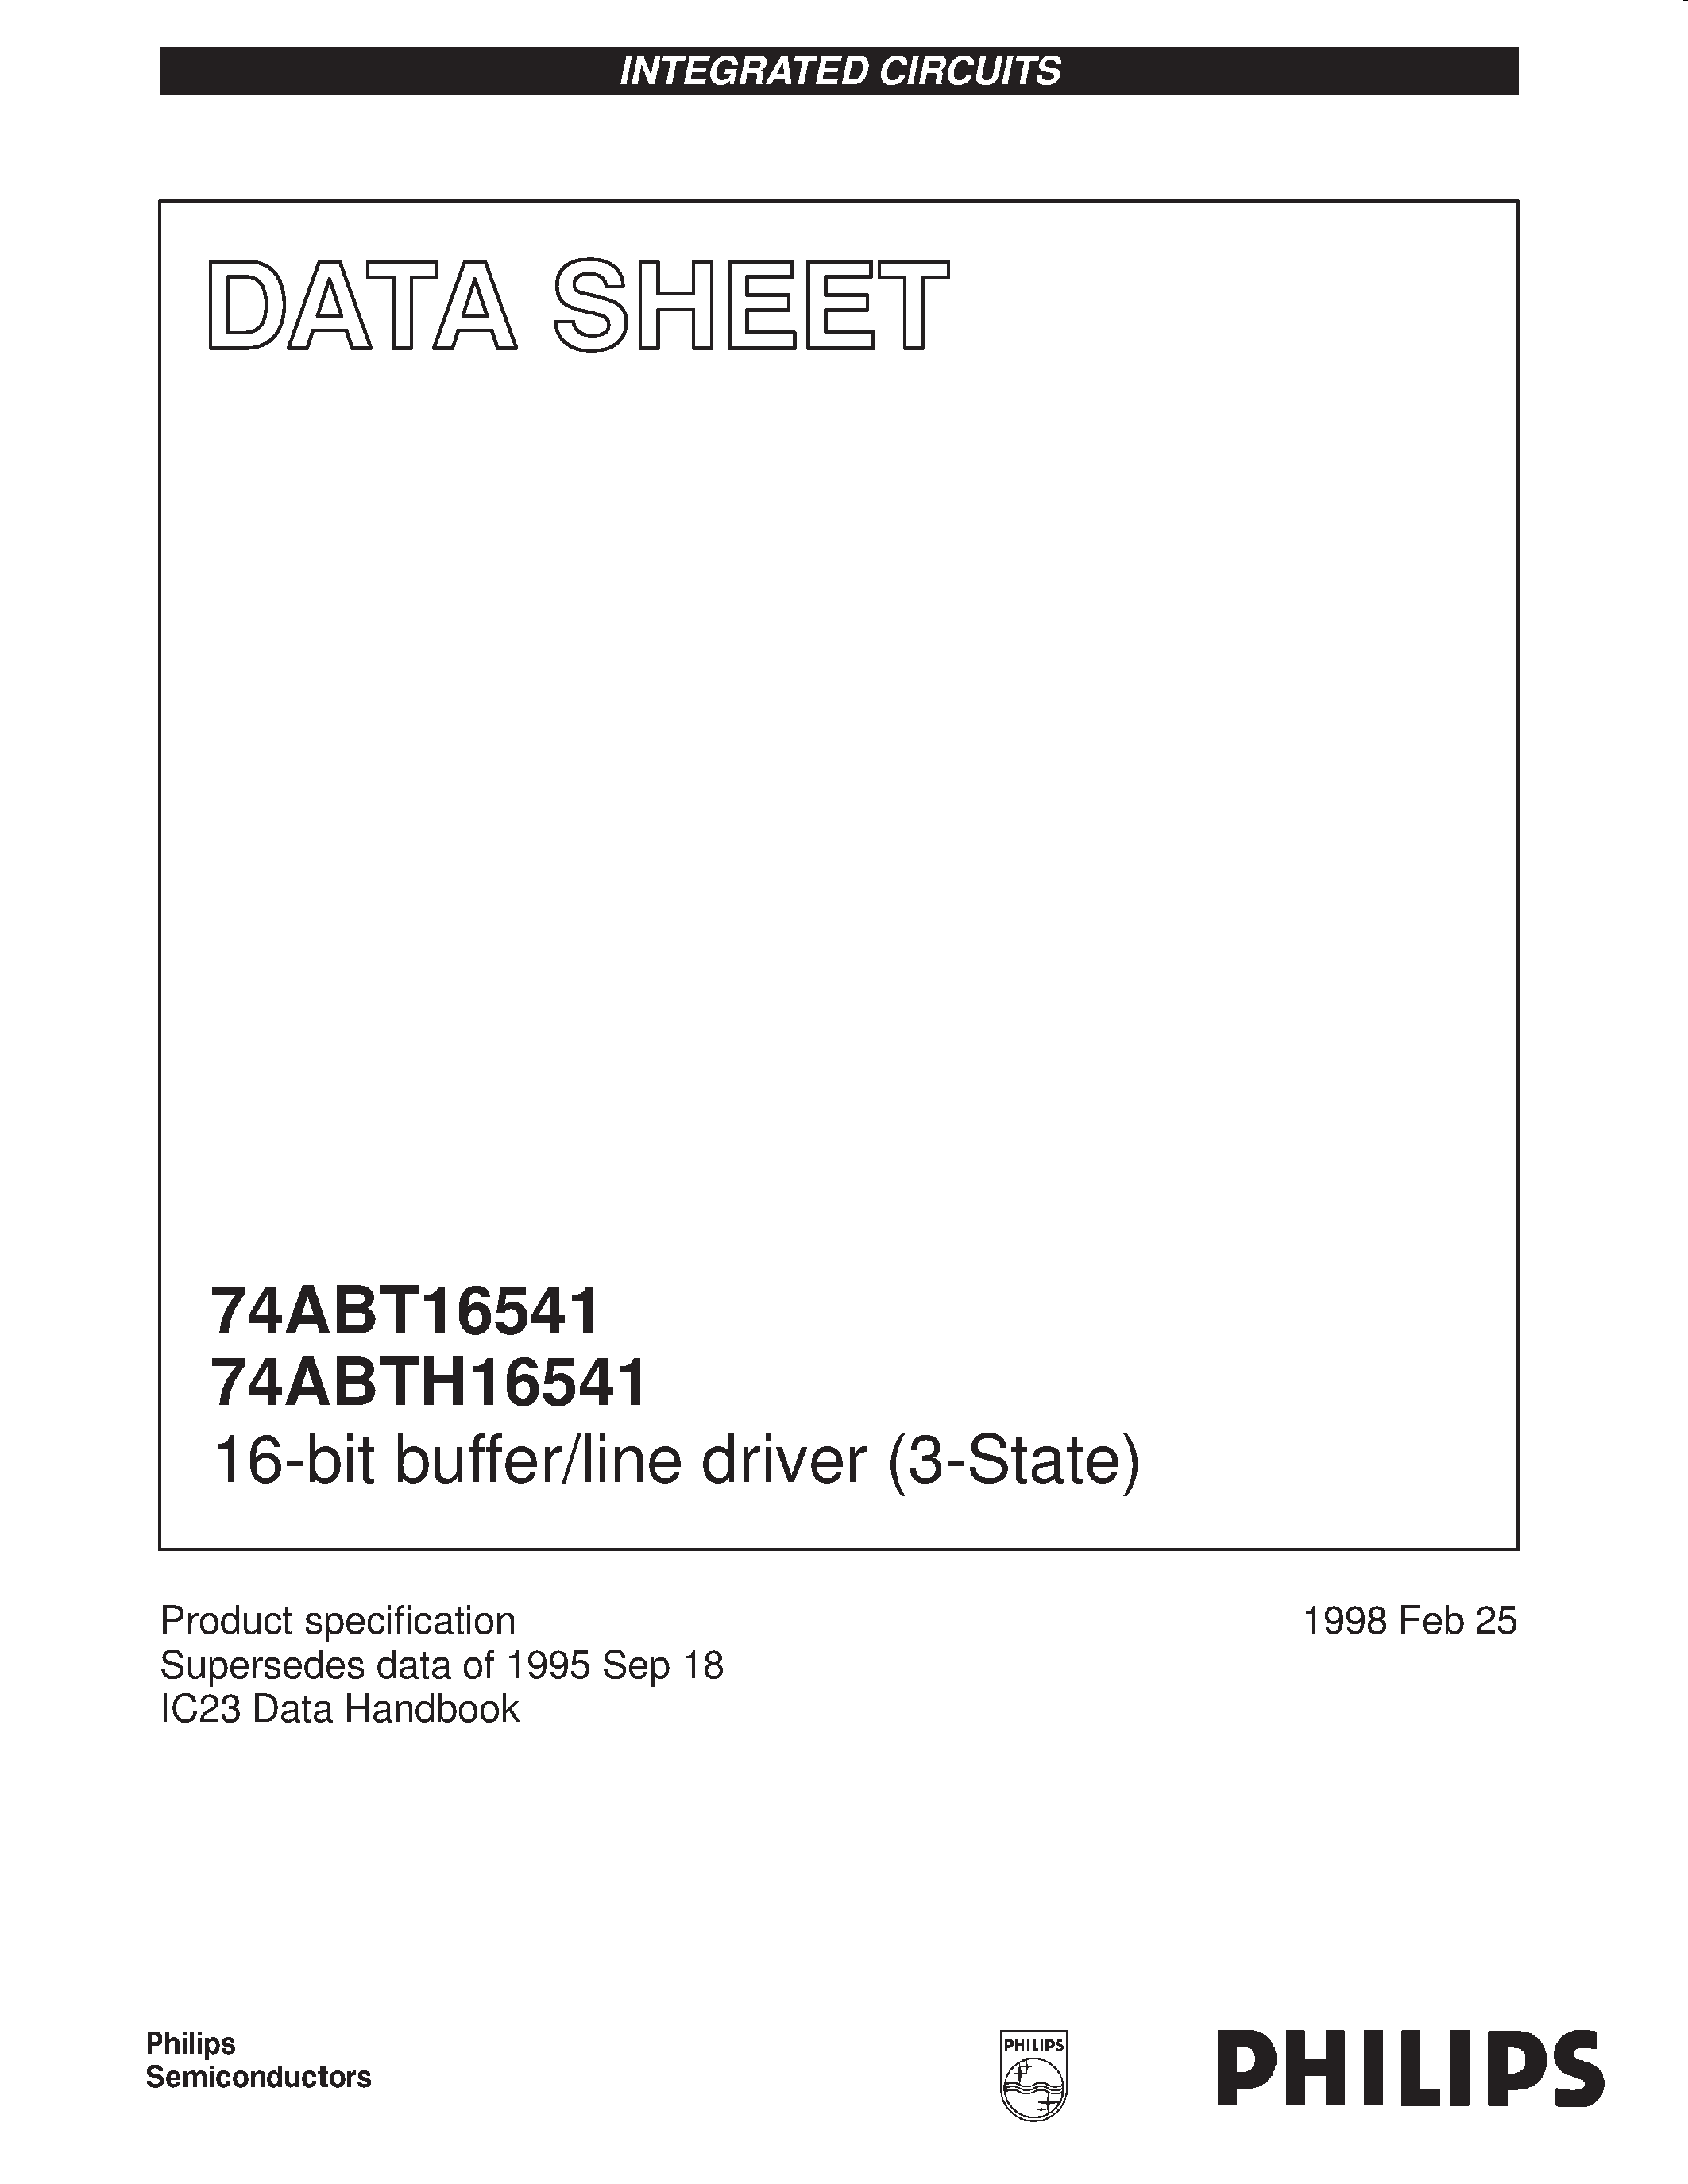 Даташит 74ABTH16541DGG - 16-bit buffer/line driver 3-State страница 1